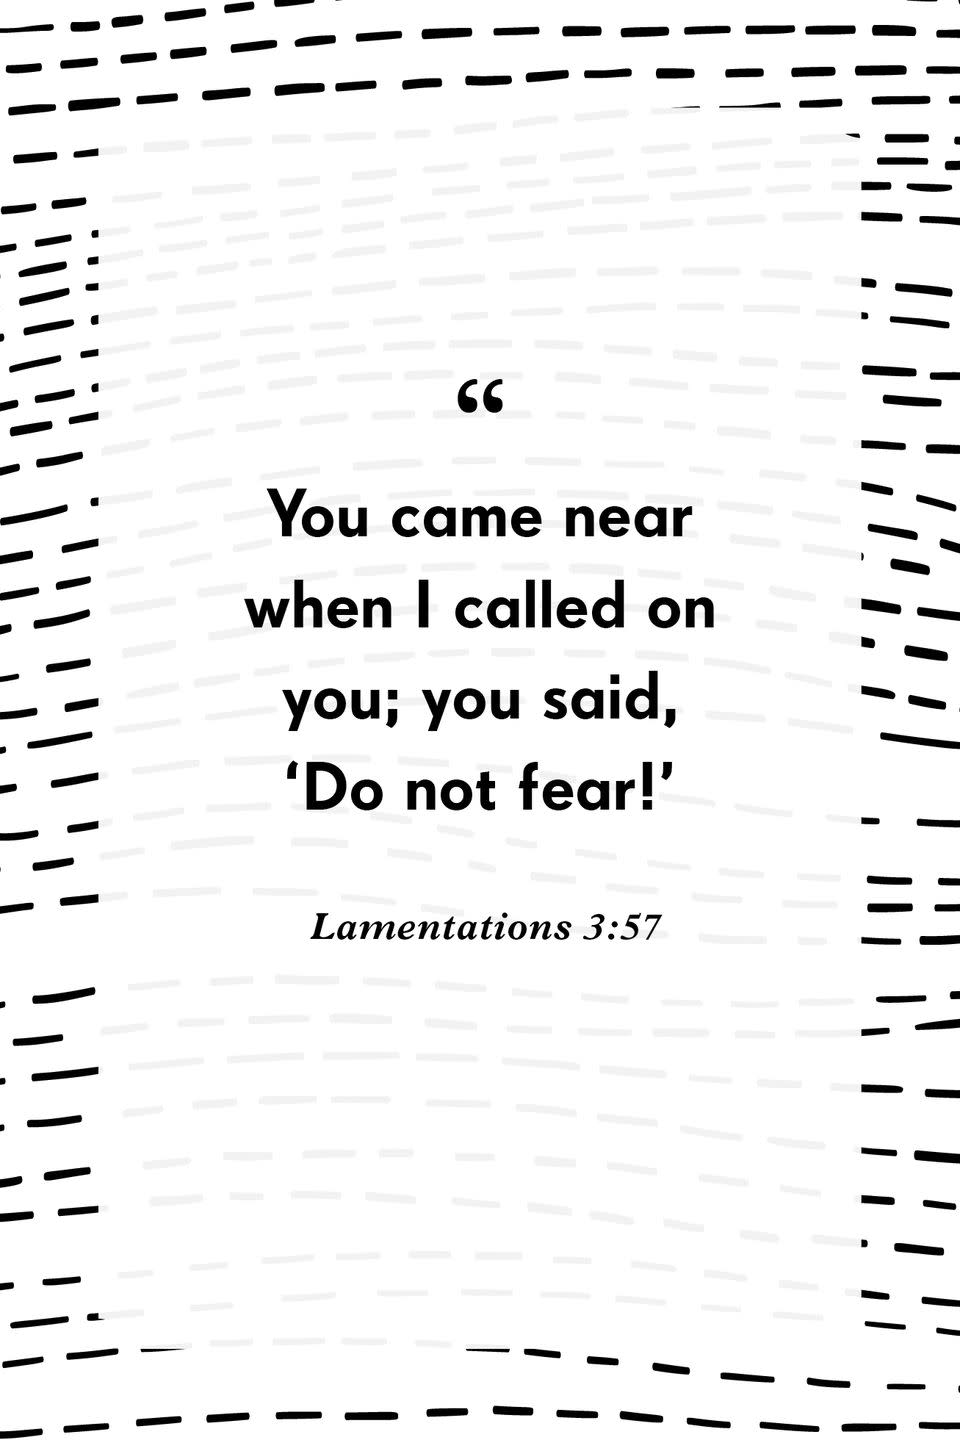 20) Lamentations 3:57